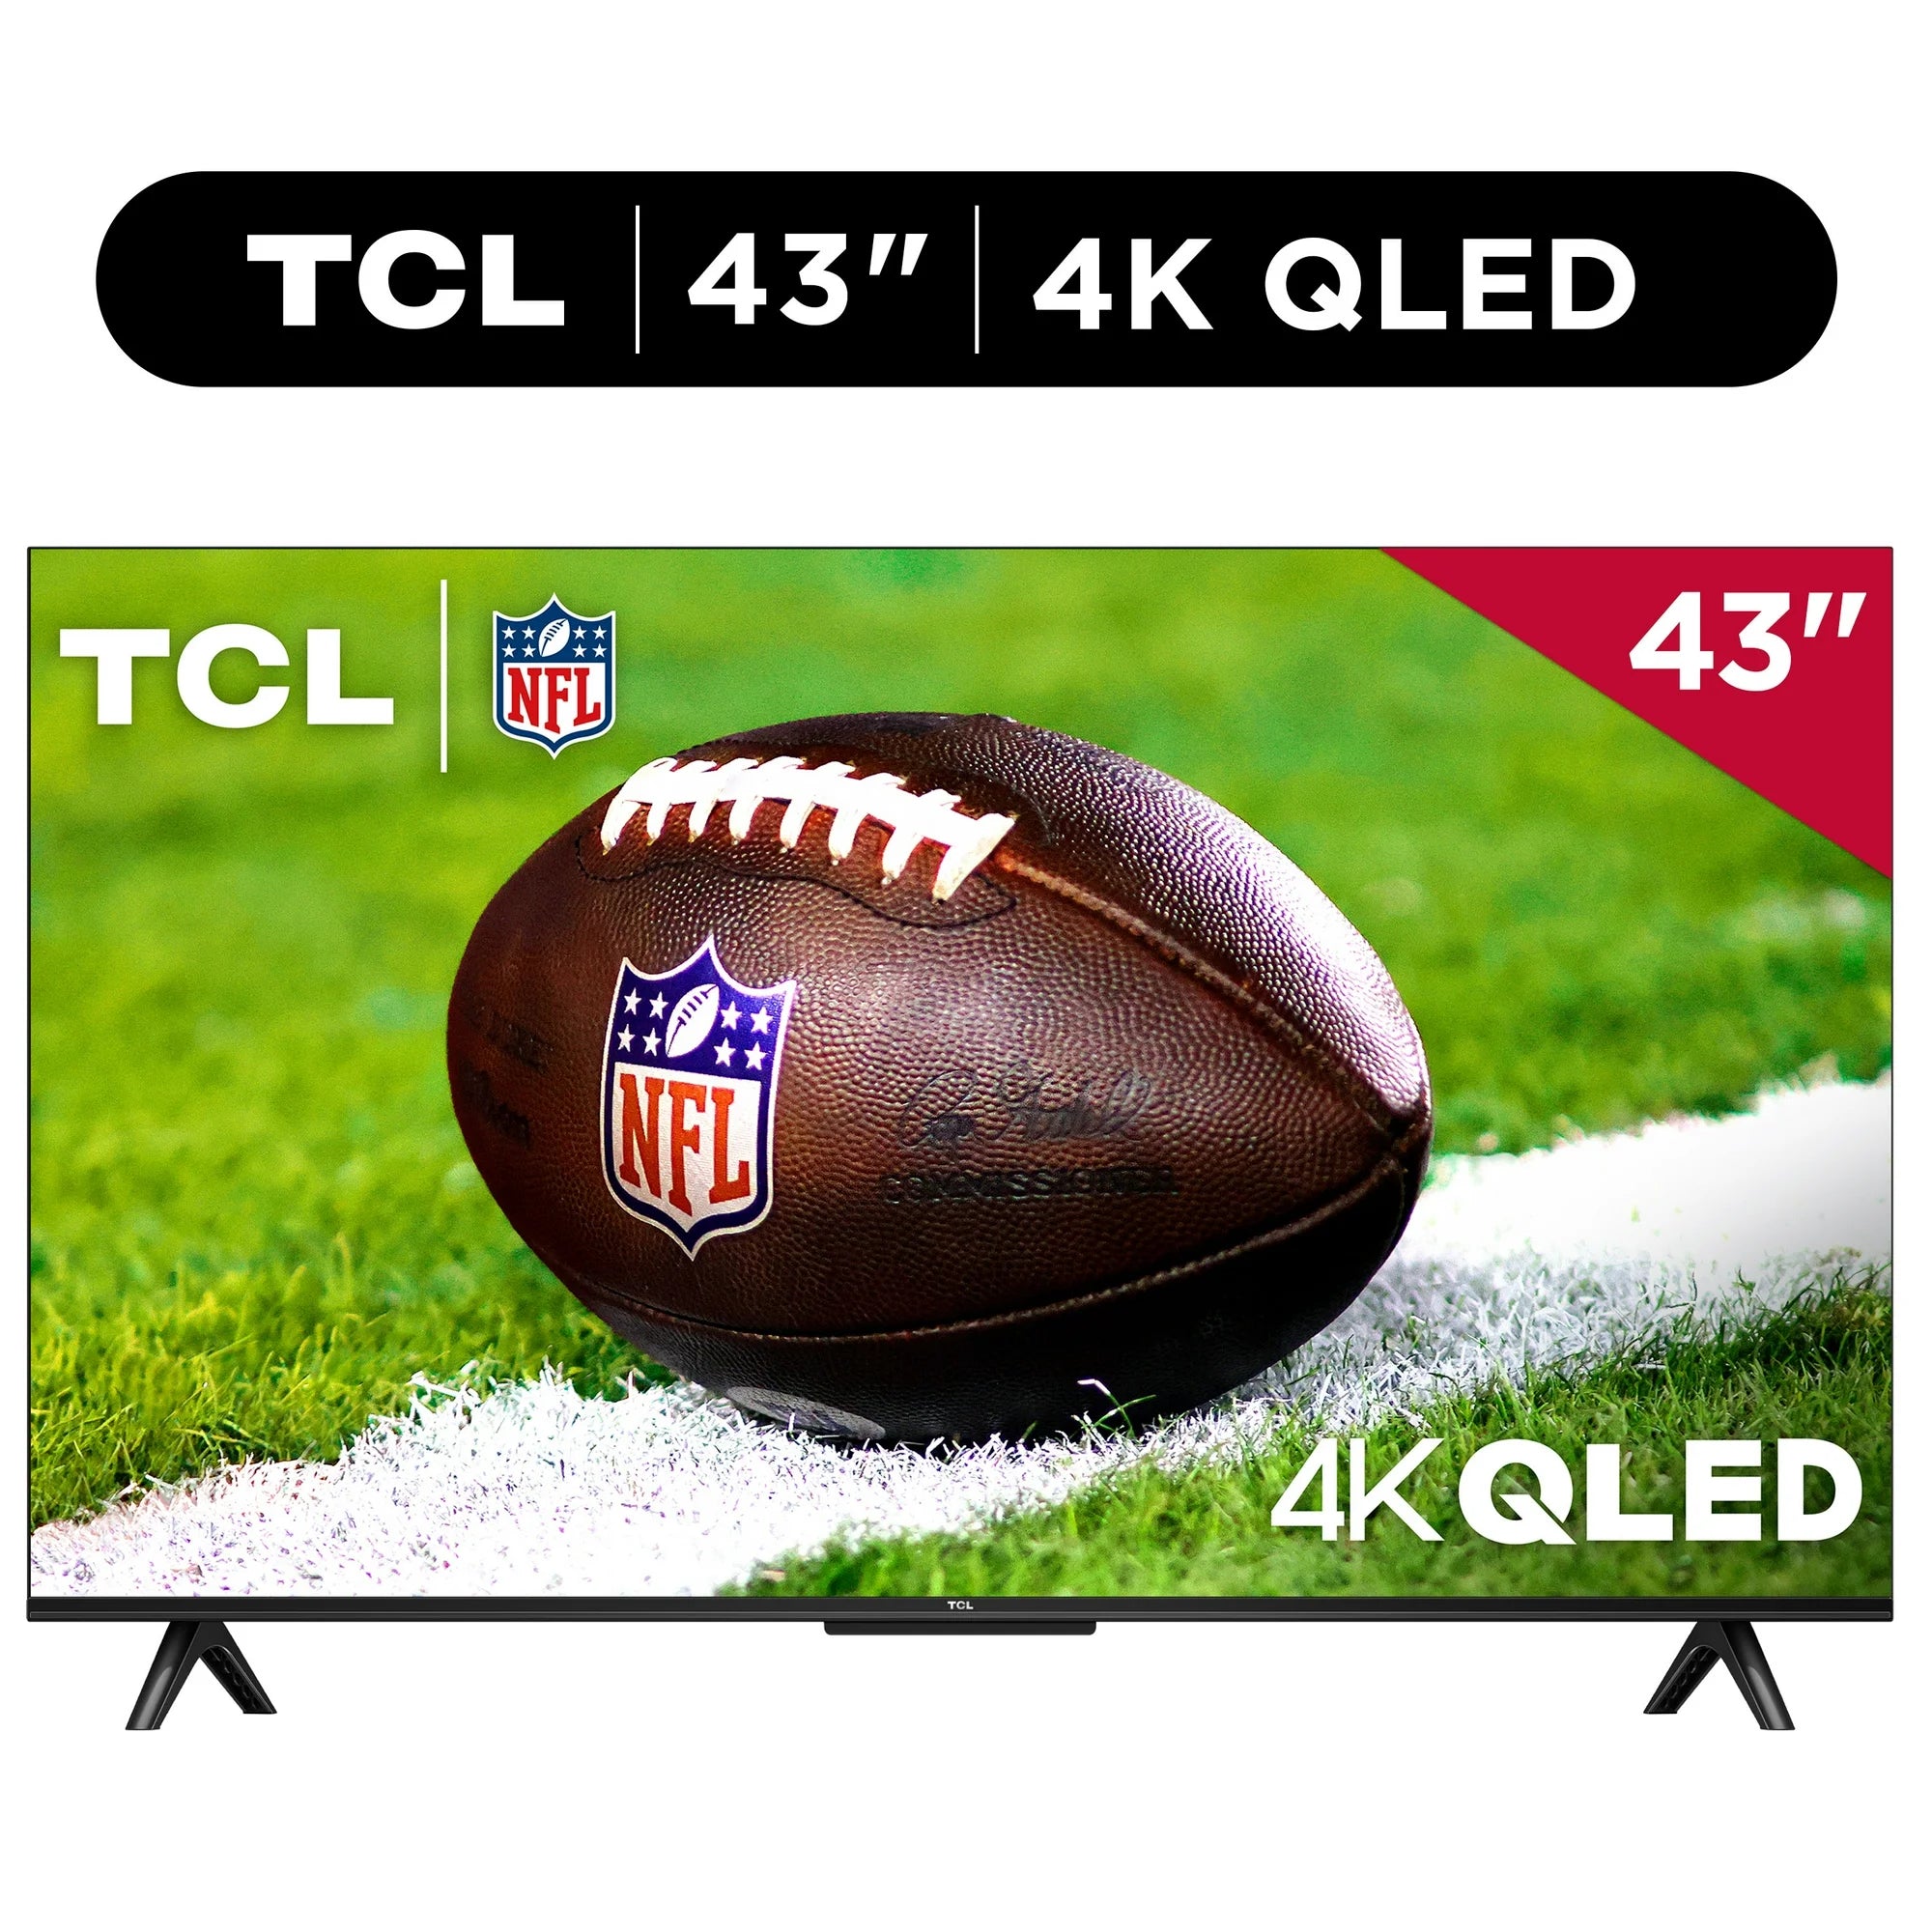 43" TCL 4K UHD HDR QLED Google TV